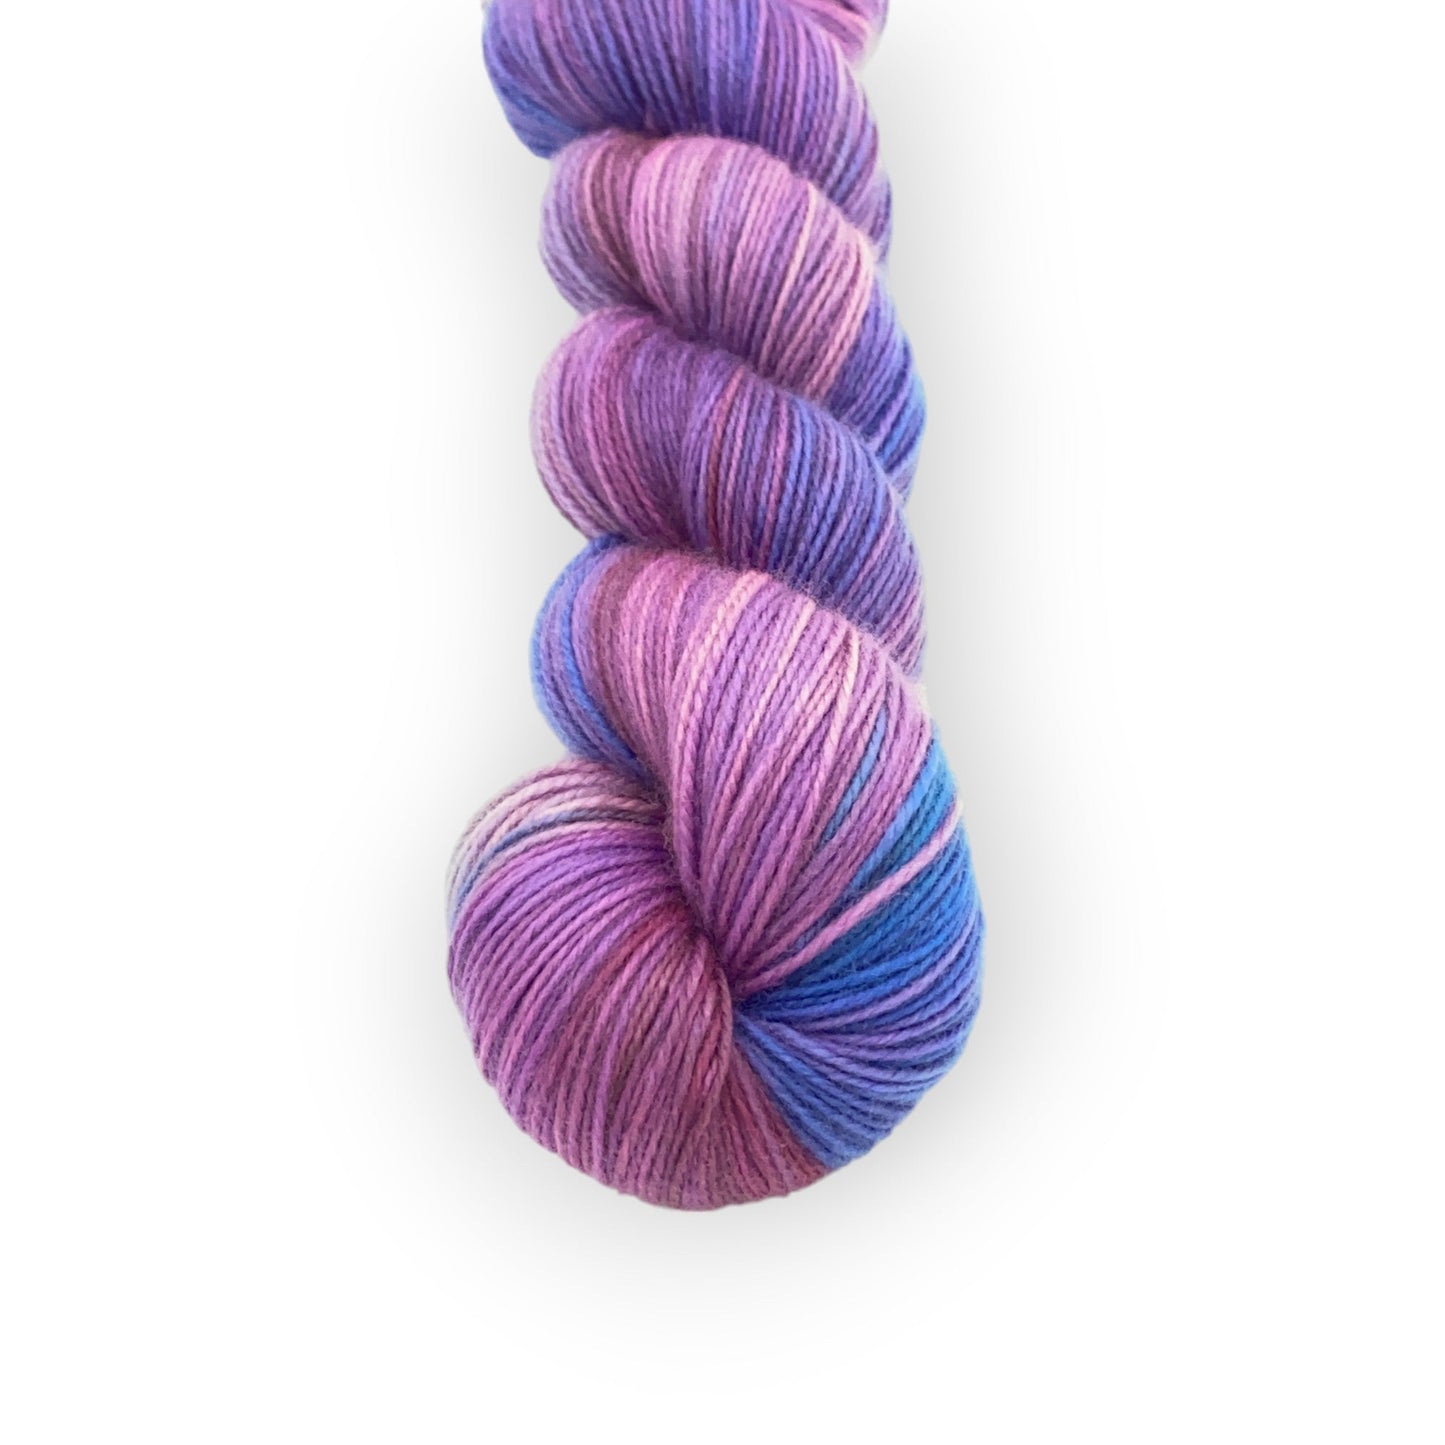 Basic Elements Sock Knitting Kit-Hand Dyed Diva-Cheers To Ewe!